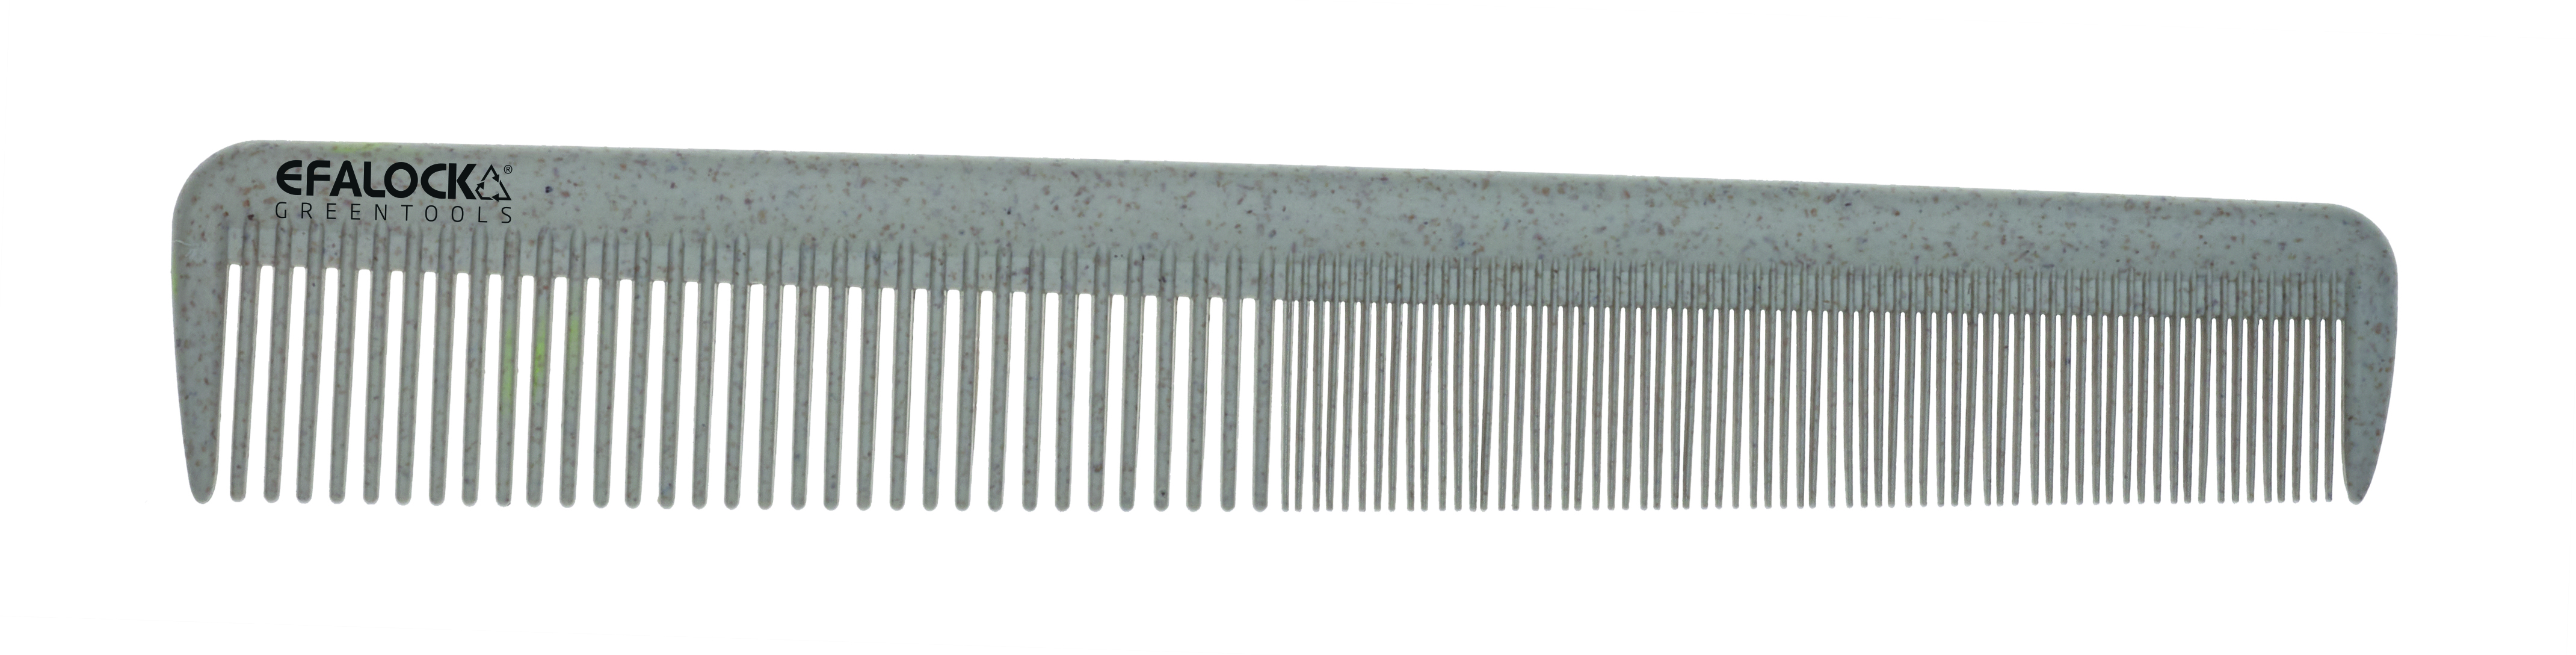 PUREGREEN Hair cutting comb # 7.5